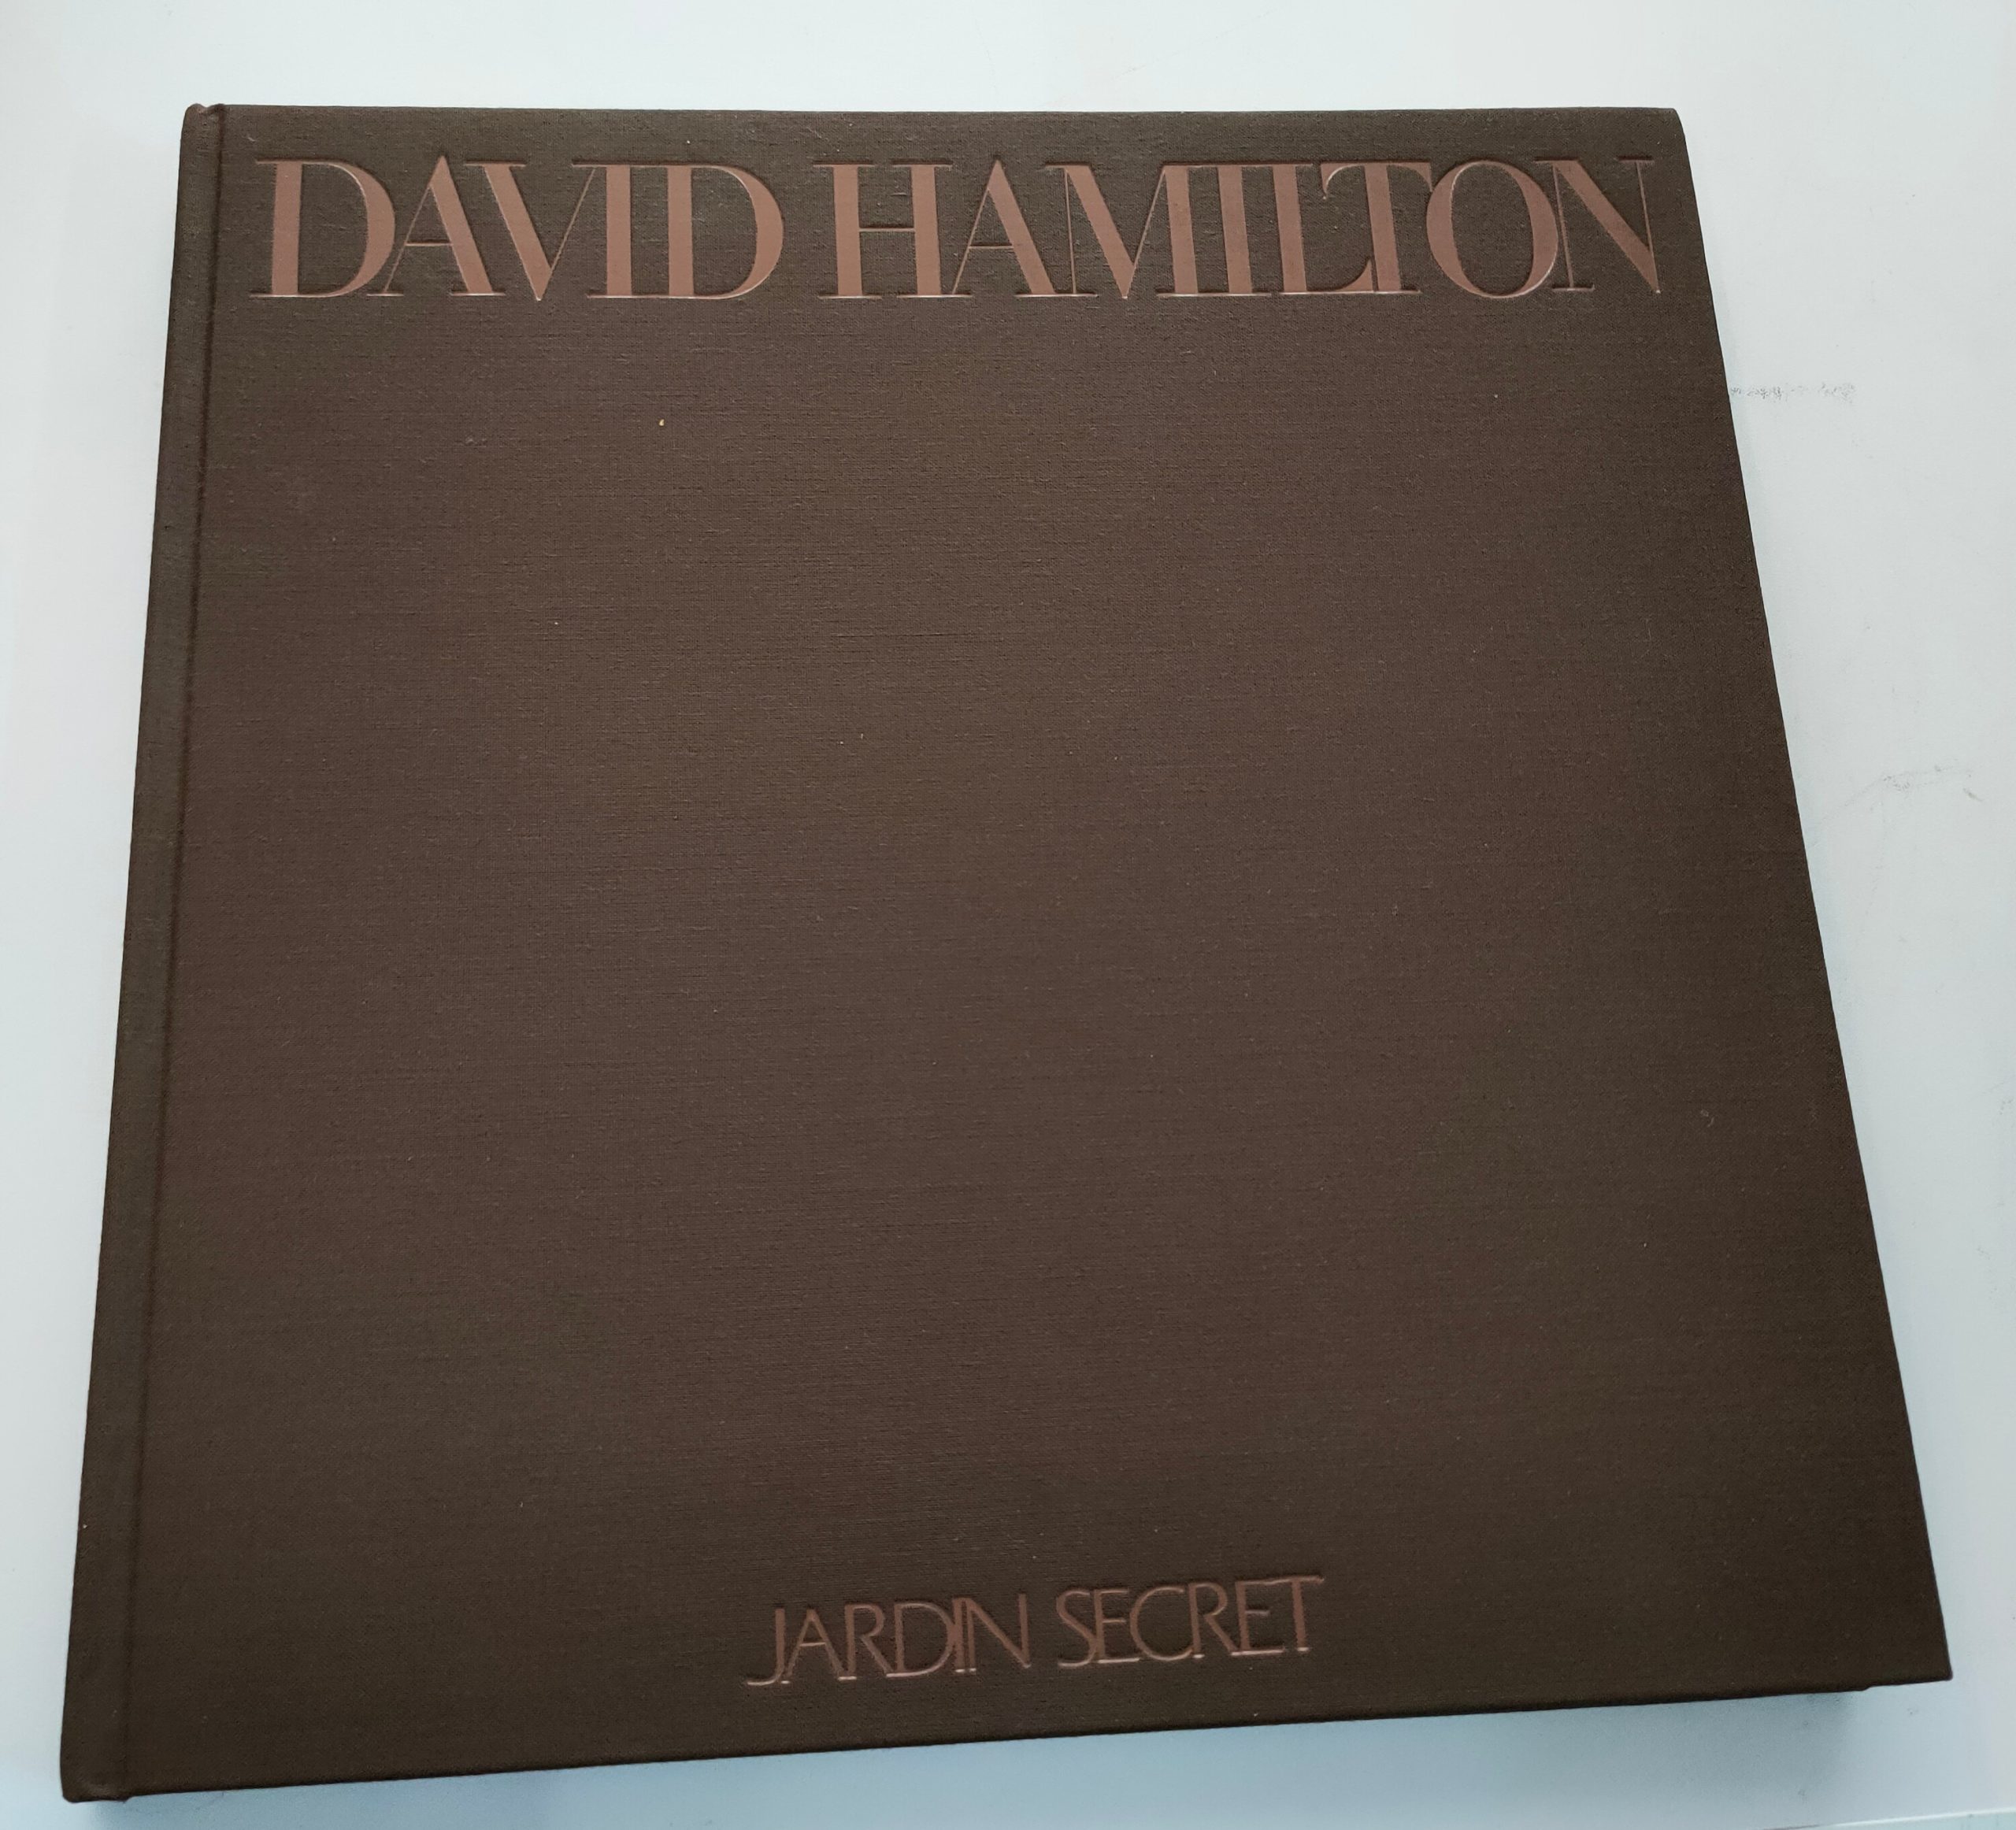 Featured image for “JARDIN SECRET / DAVID HAMILTON / AGEP / 1980 / Photographie”